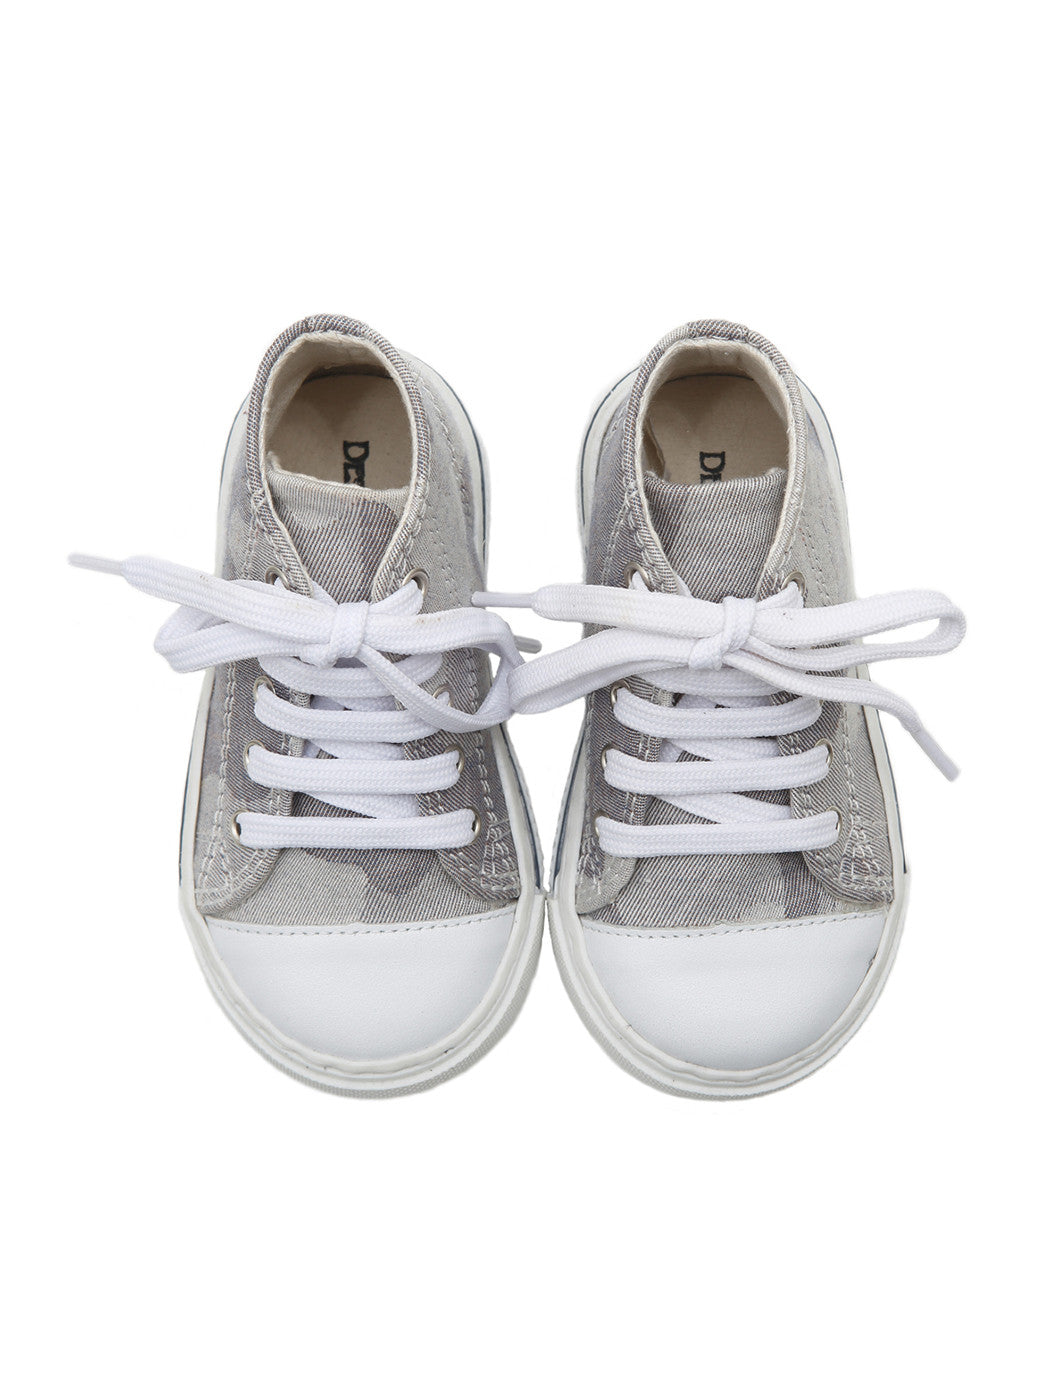 Baby bootie shoe for boy-DIEGO Grey